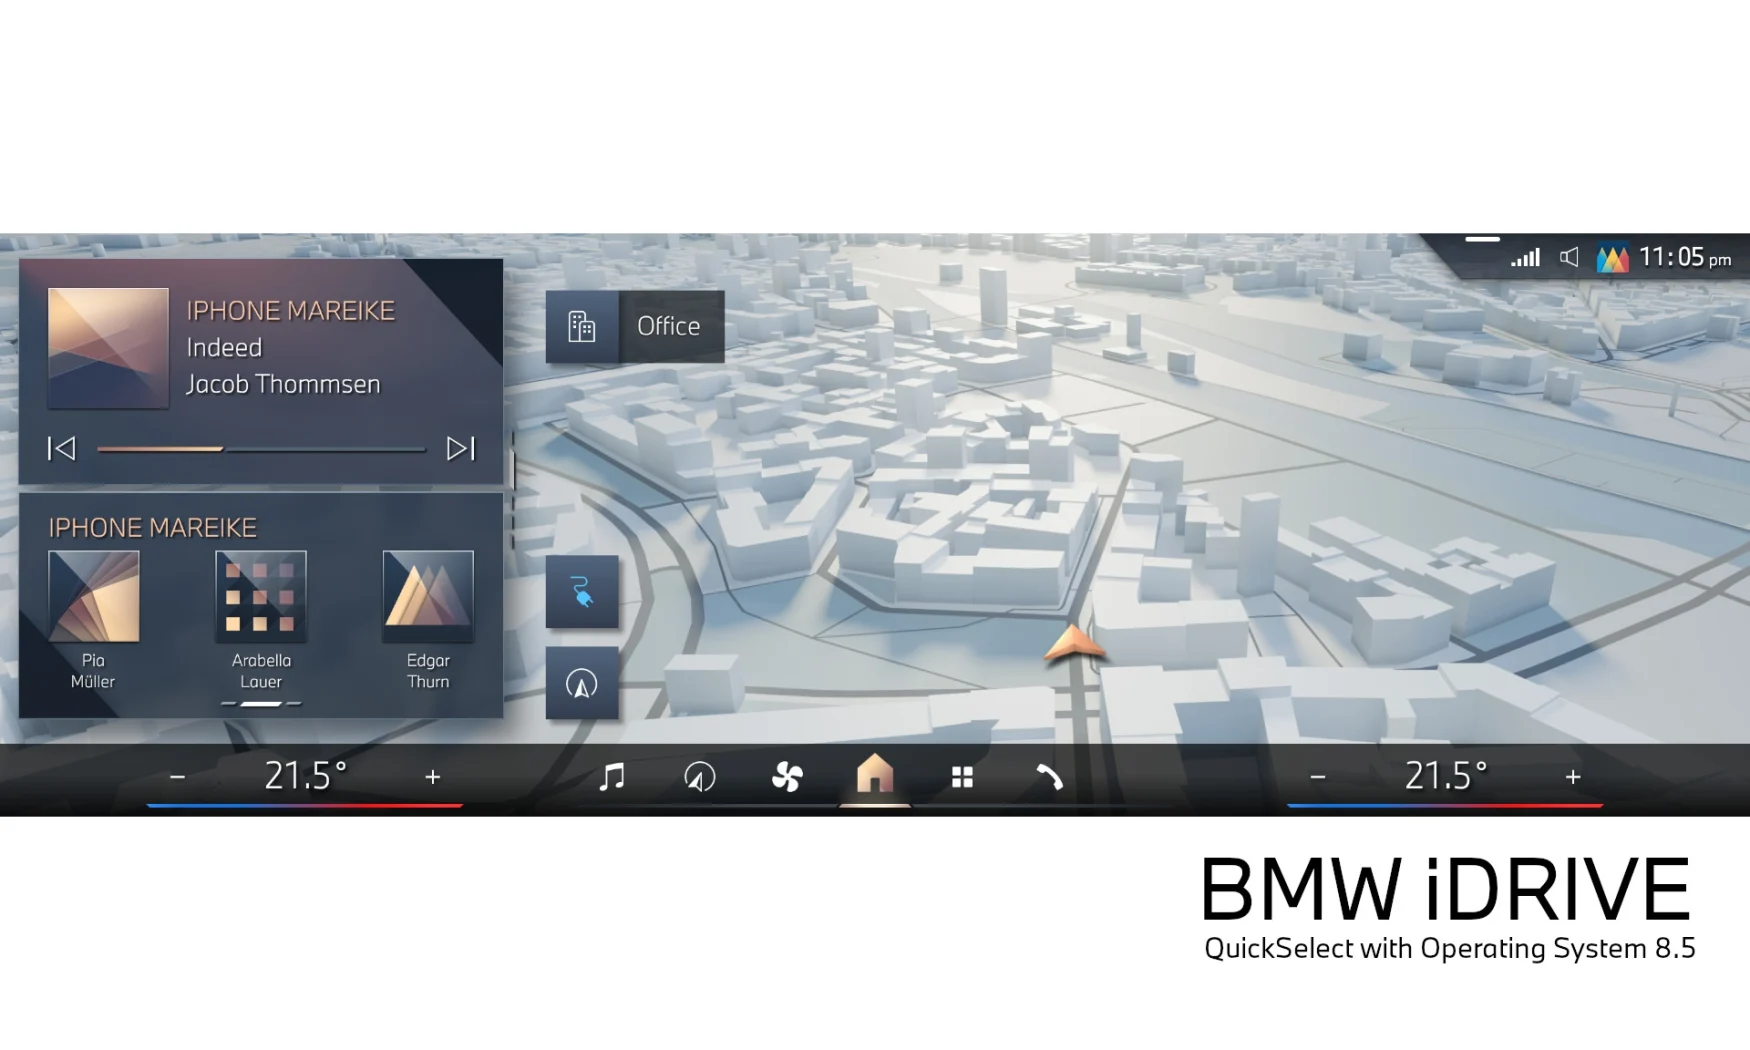 BMW 更新后的操作系统 8.5 信息娱乐主屏幕截图。 在左侧，它包括带有导航的电话控件和位于底部的任务栏（带有快捷方式）。